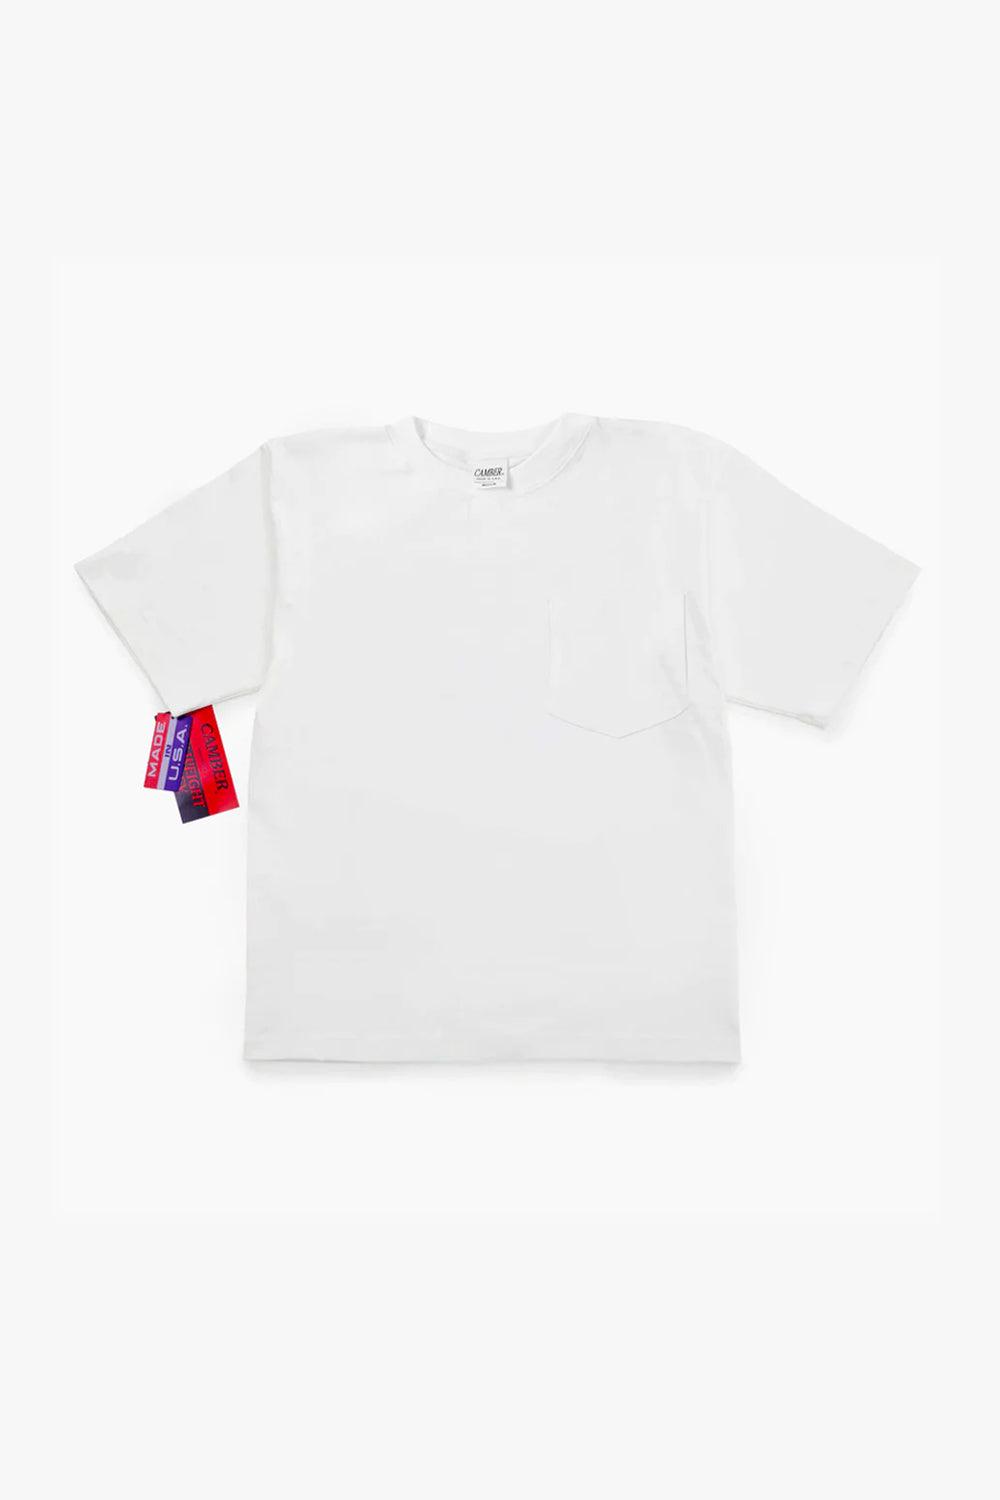 CAMBER USA T-shirt Max-weight Blanc à poche - suuupply